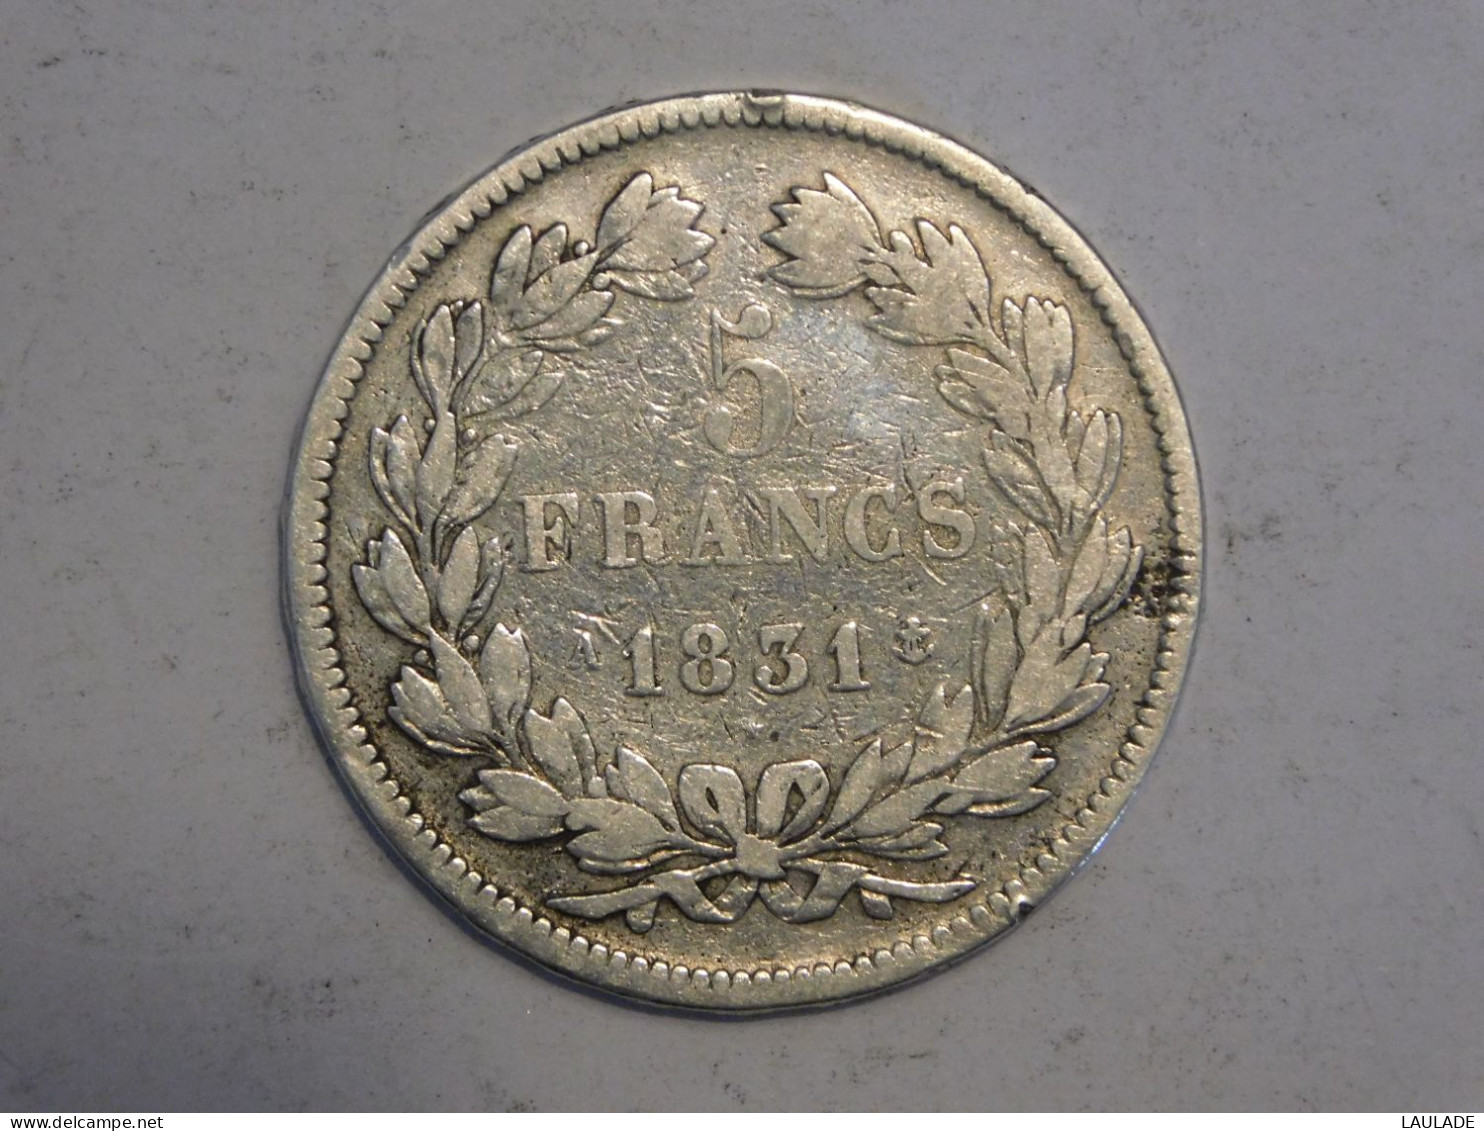 FRANCE 5 Francs 1831 A - Silver, Argent Franc - 5 Francs